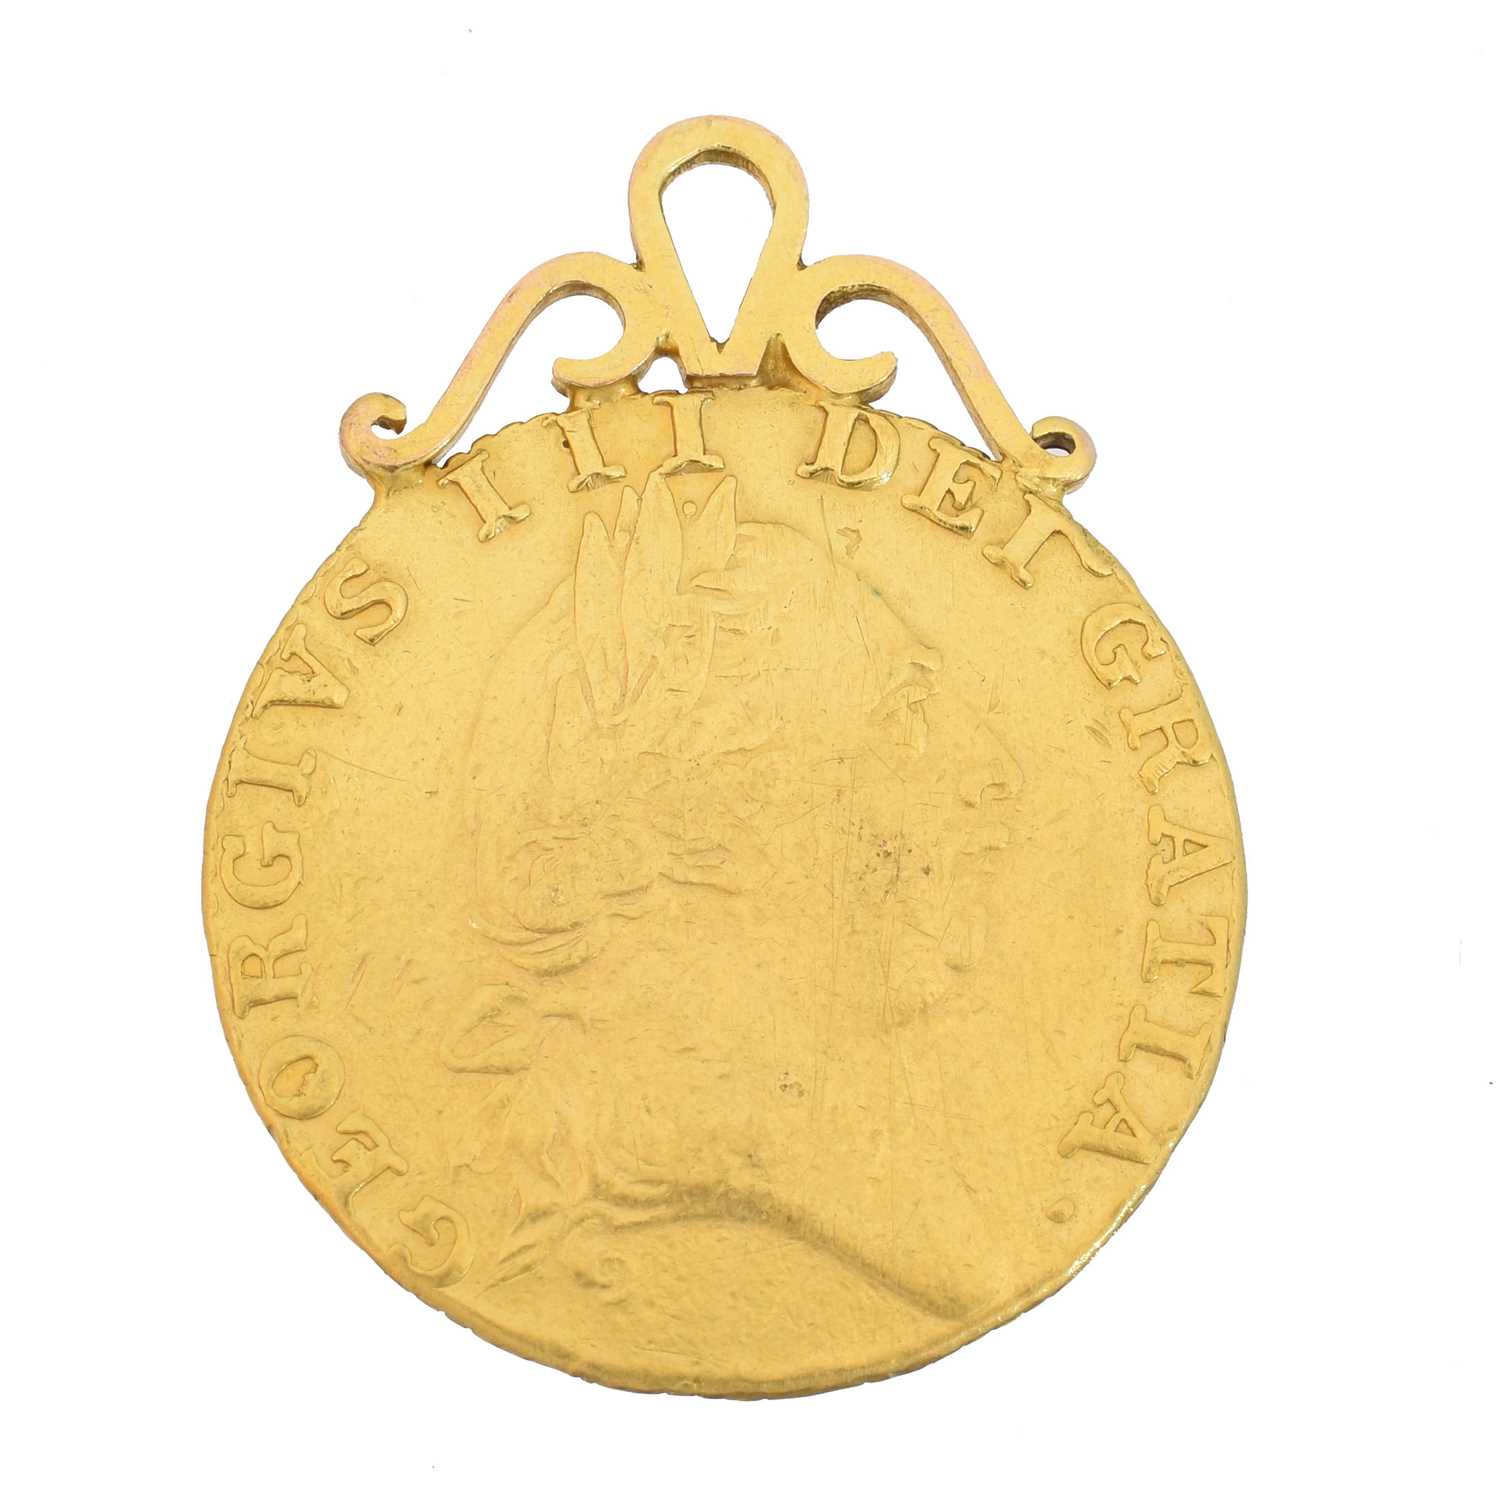 Lot A George III guinea pendant